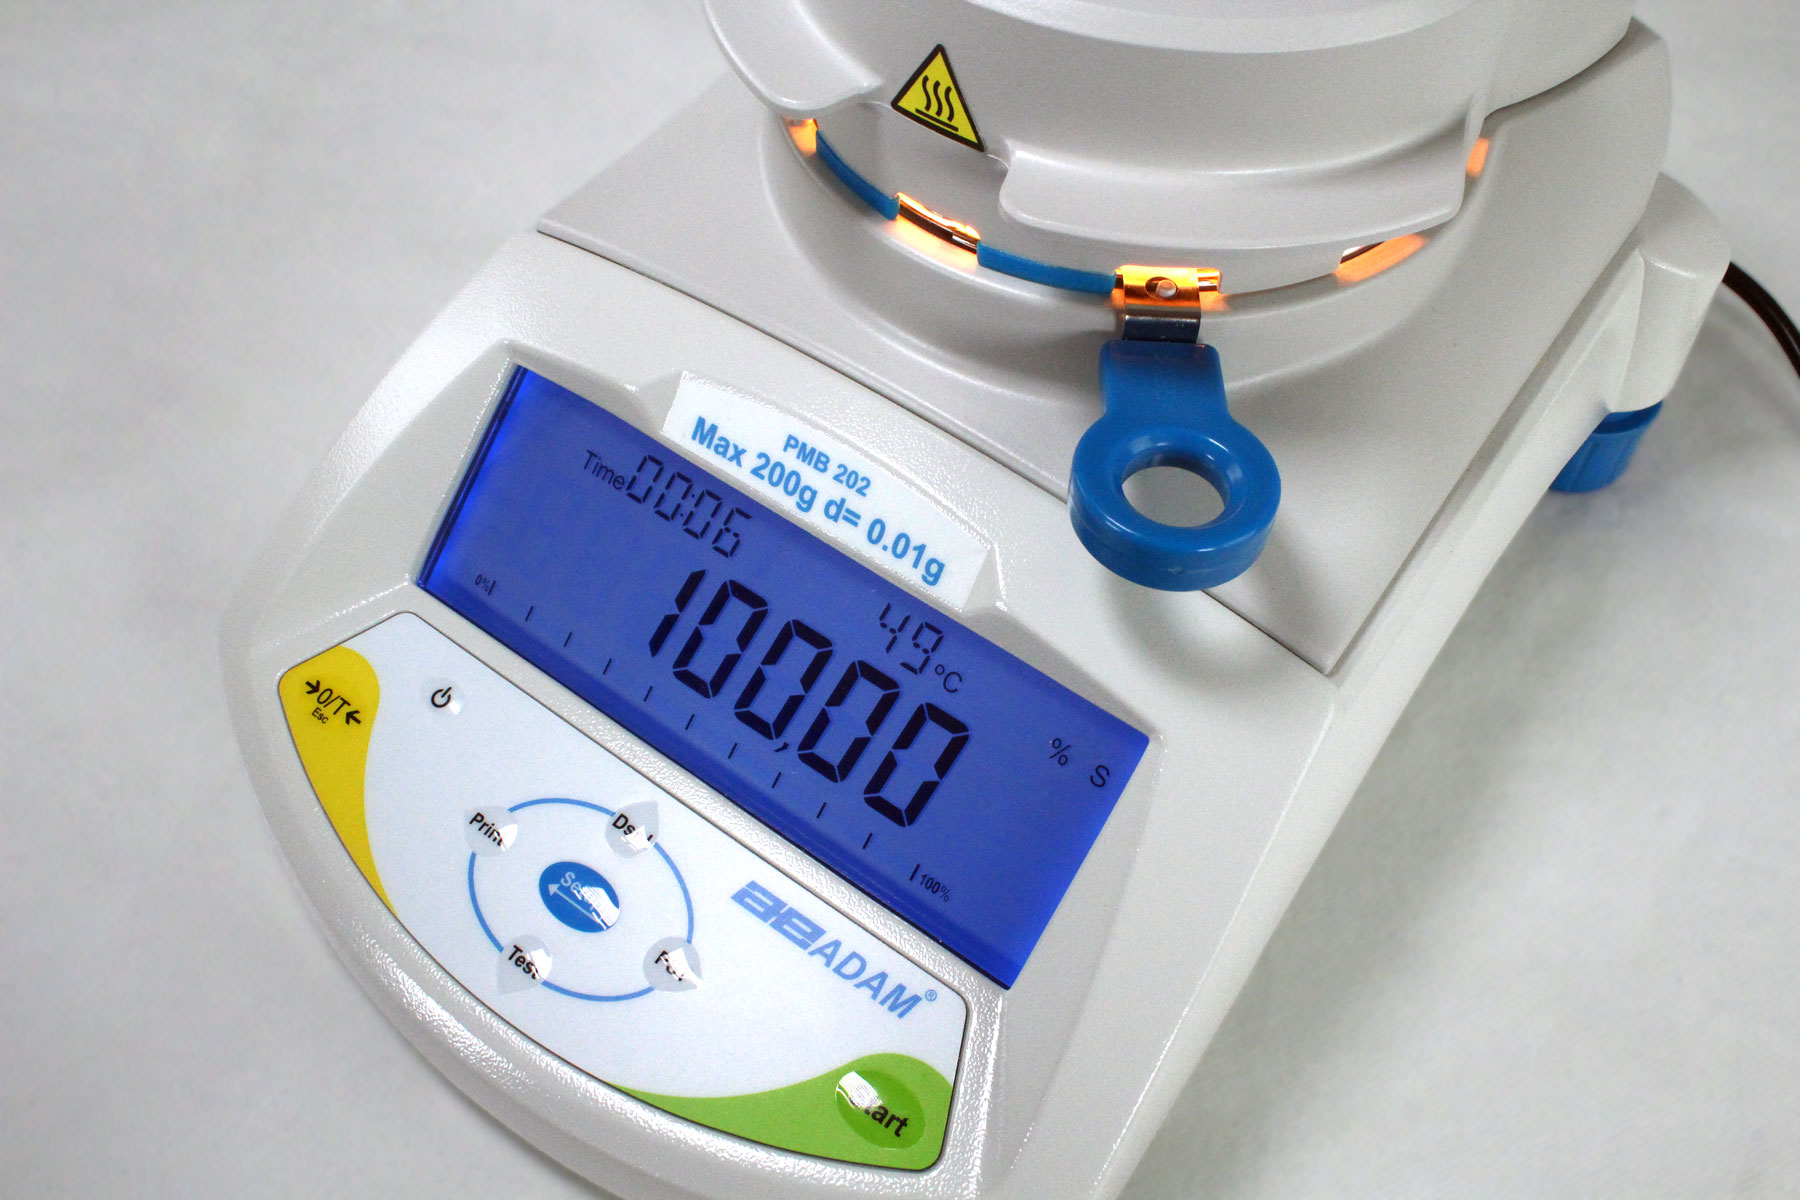 PMB moisture analyzer set to heat sample